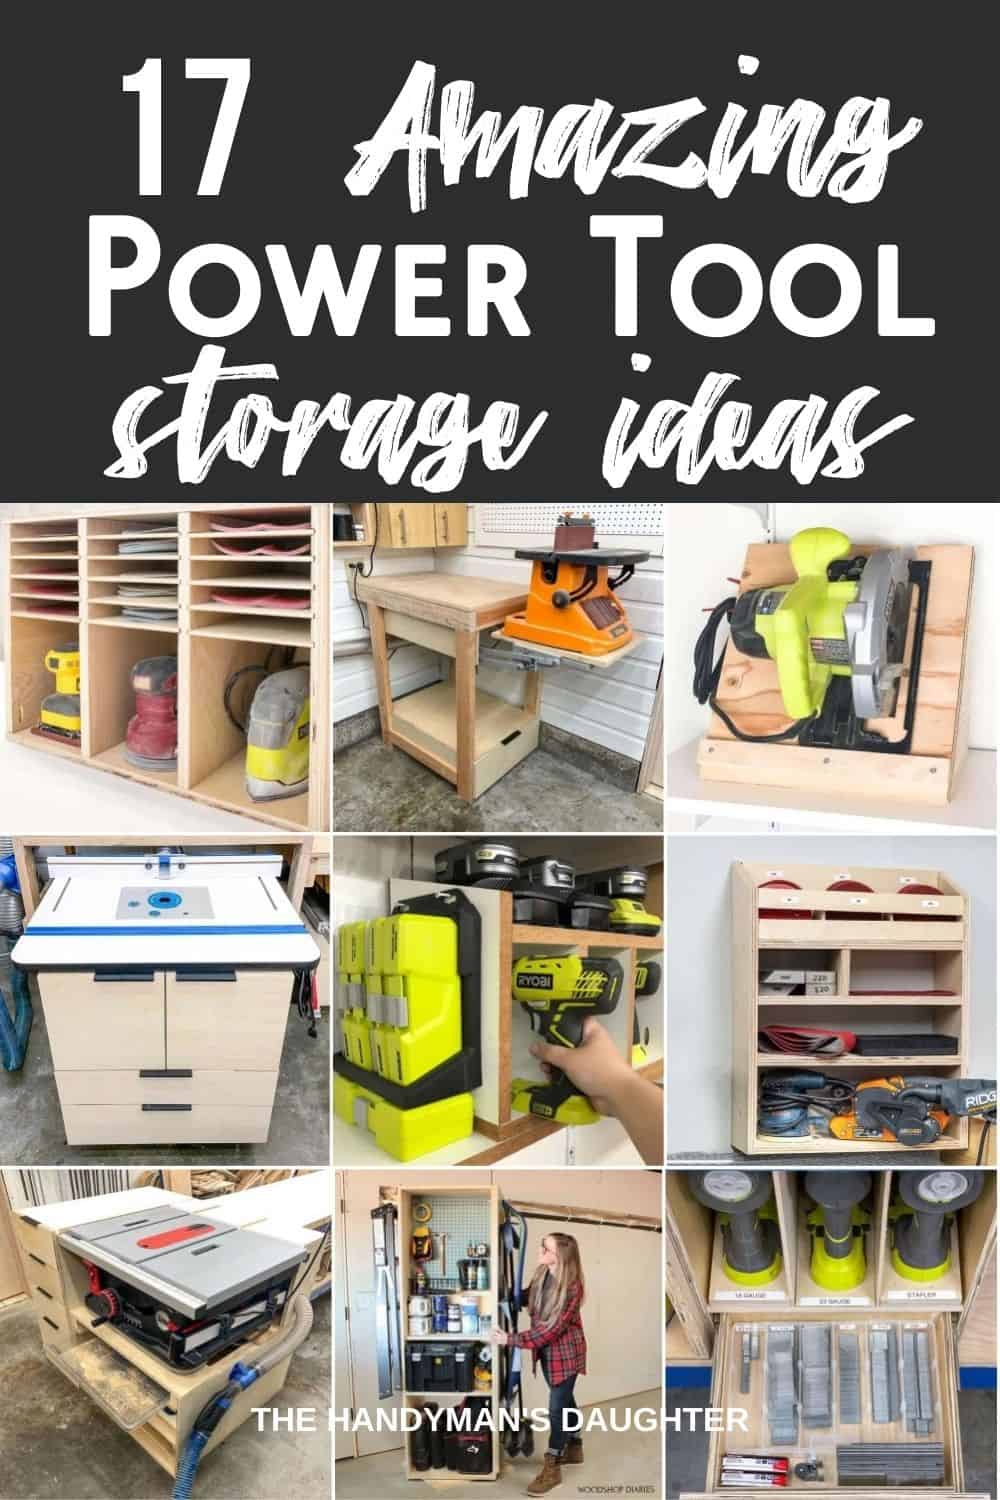 Power Tool Organizer Garage Storage Organization Shelving Tool Holder Drill  Rack Shelf Rolling Cart Open Tool Chest Cabinet Box Organizer with Wheels